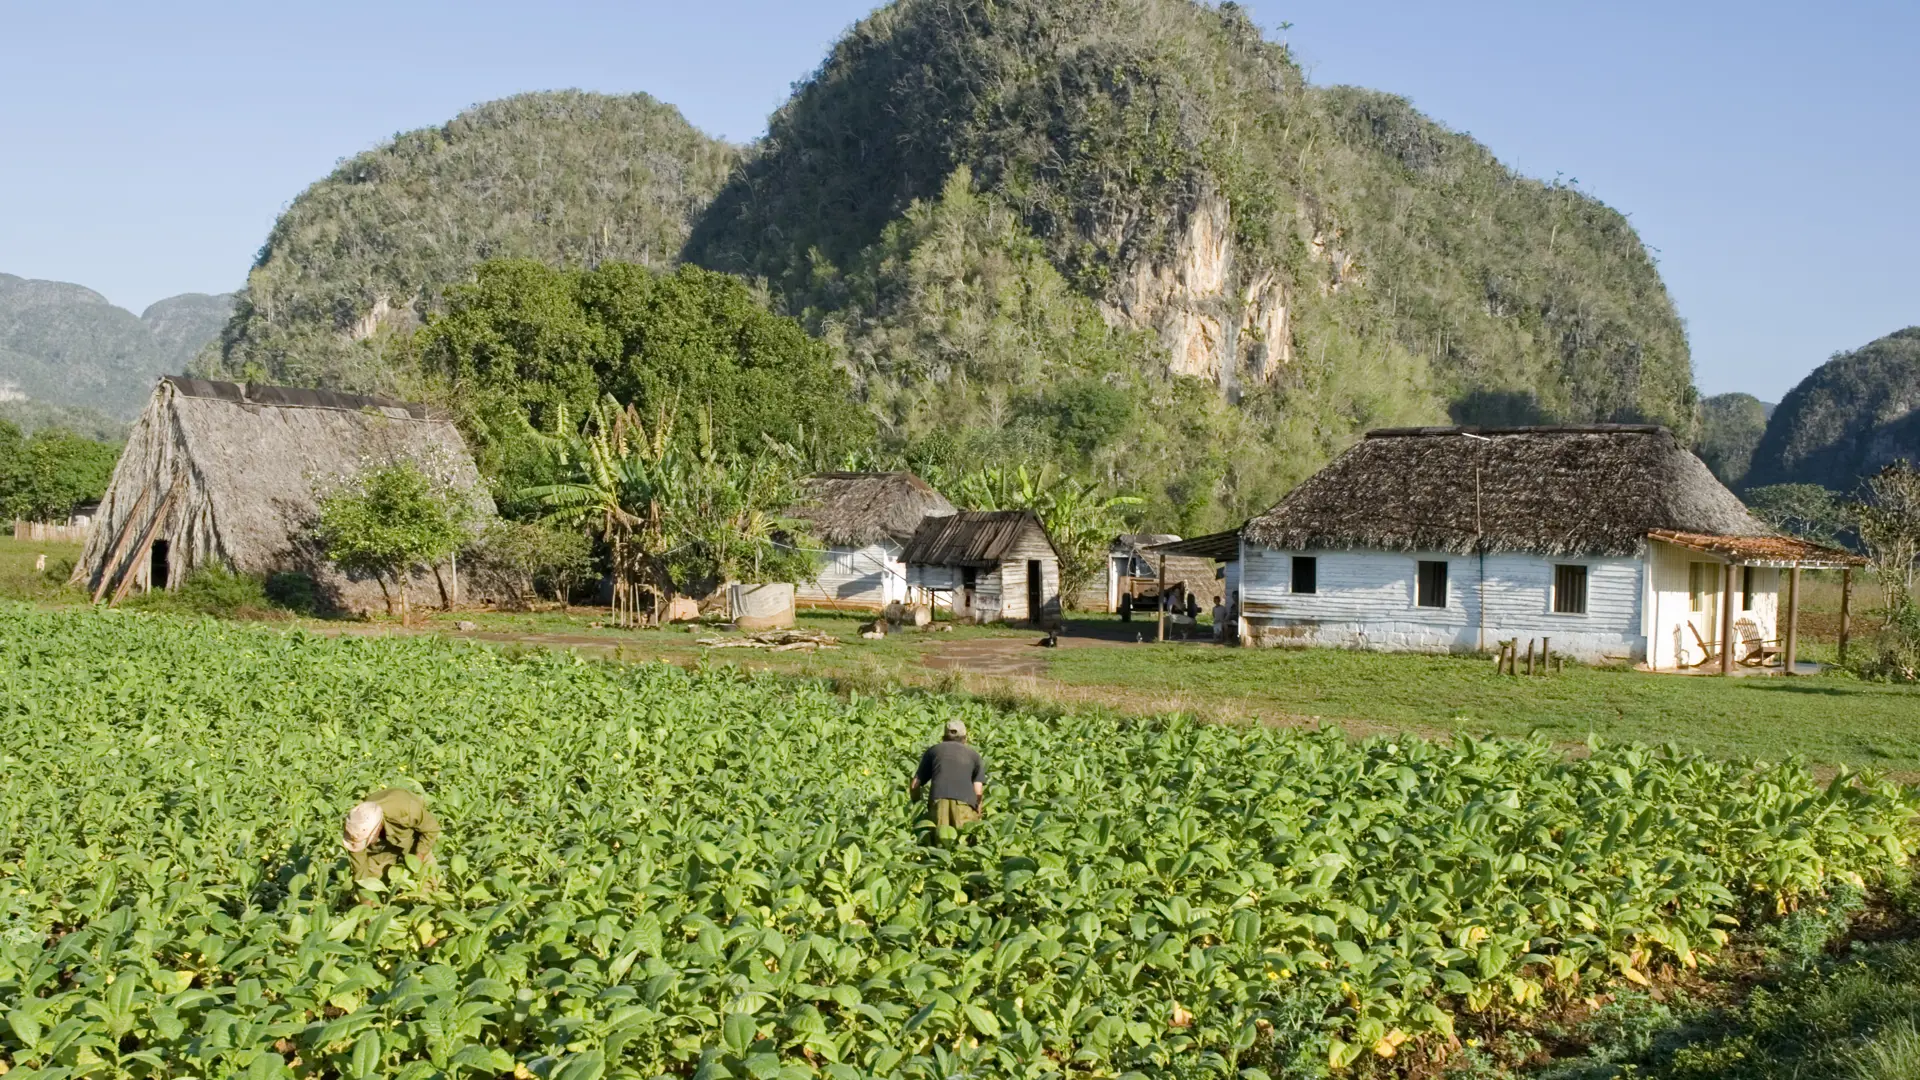 men working on tobacco field in vinales-cuba.jpg